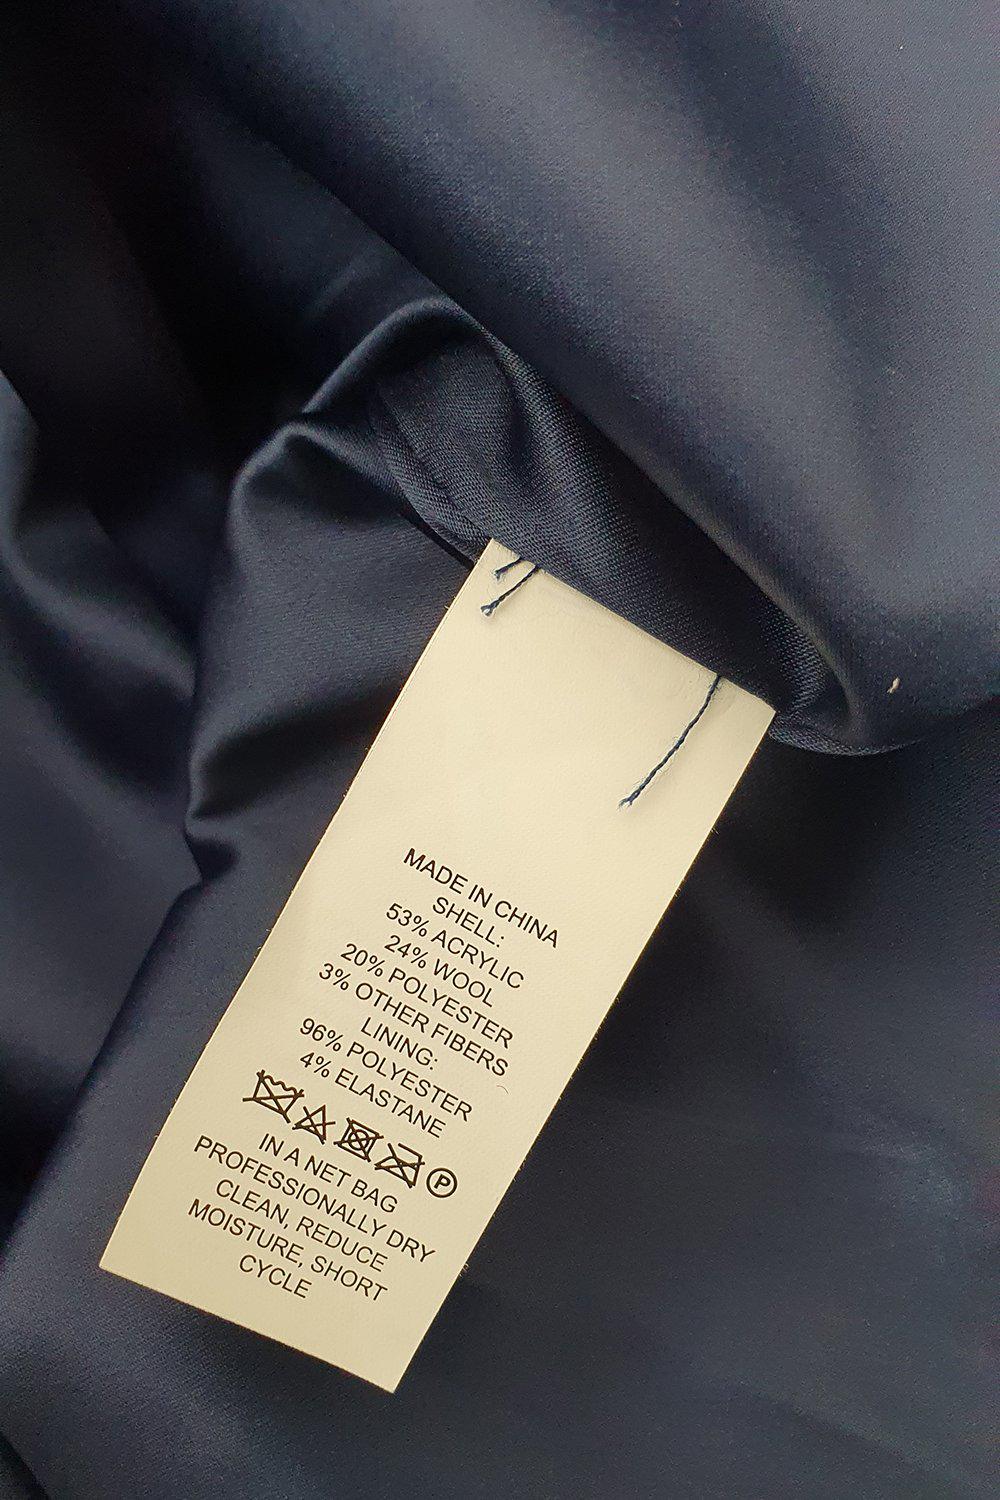 KATE SPADE New York SS18 Jasmeen Blue Madison Avenue Tweed Dress (US 06 | UK 10)-The Freperie